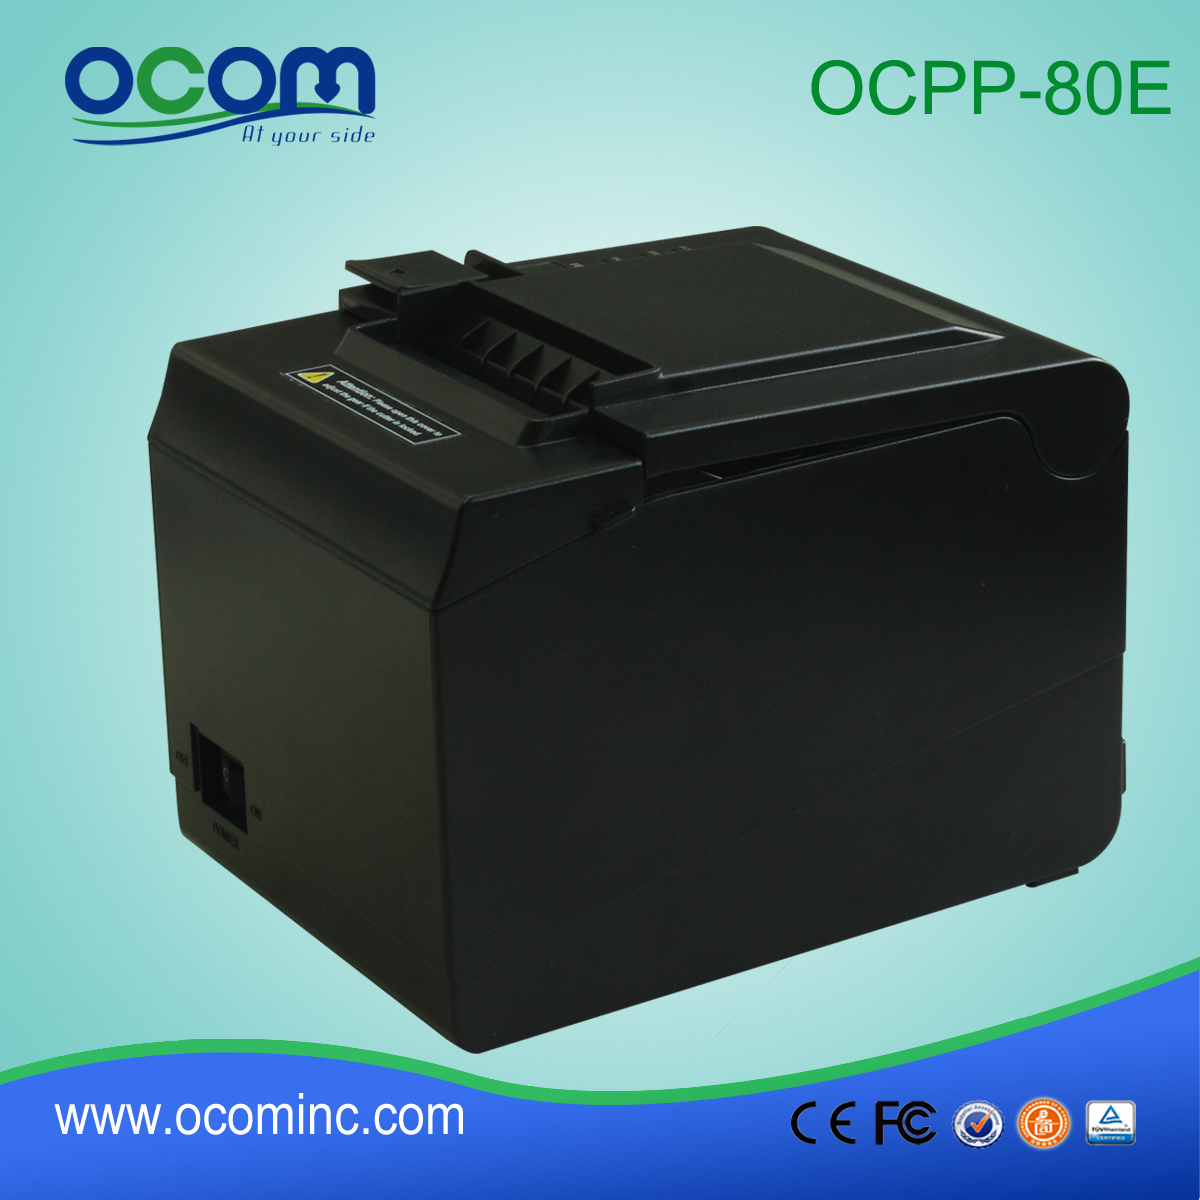 OCPP-80E --- Cina fabbrica stampante termica Android di alta qualità